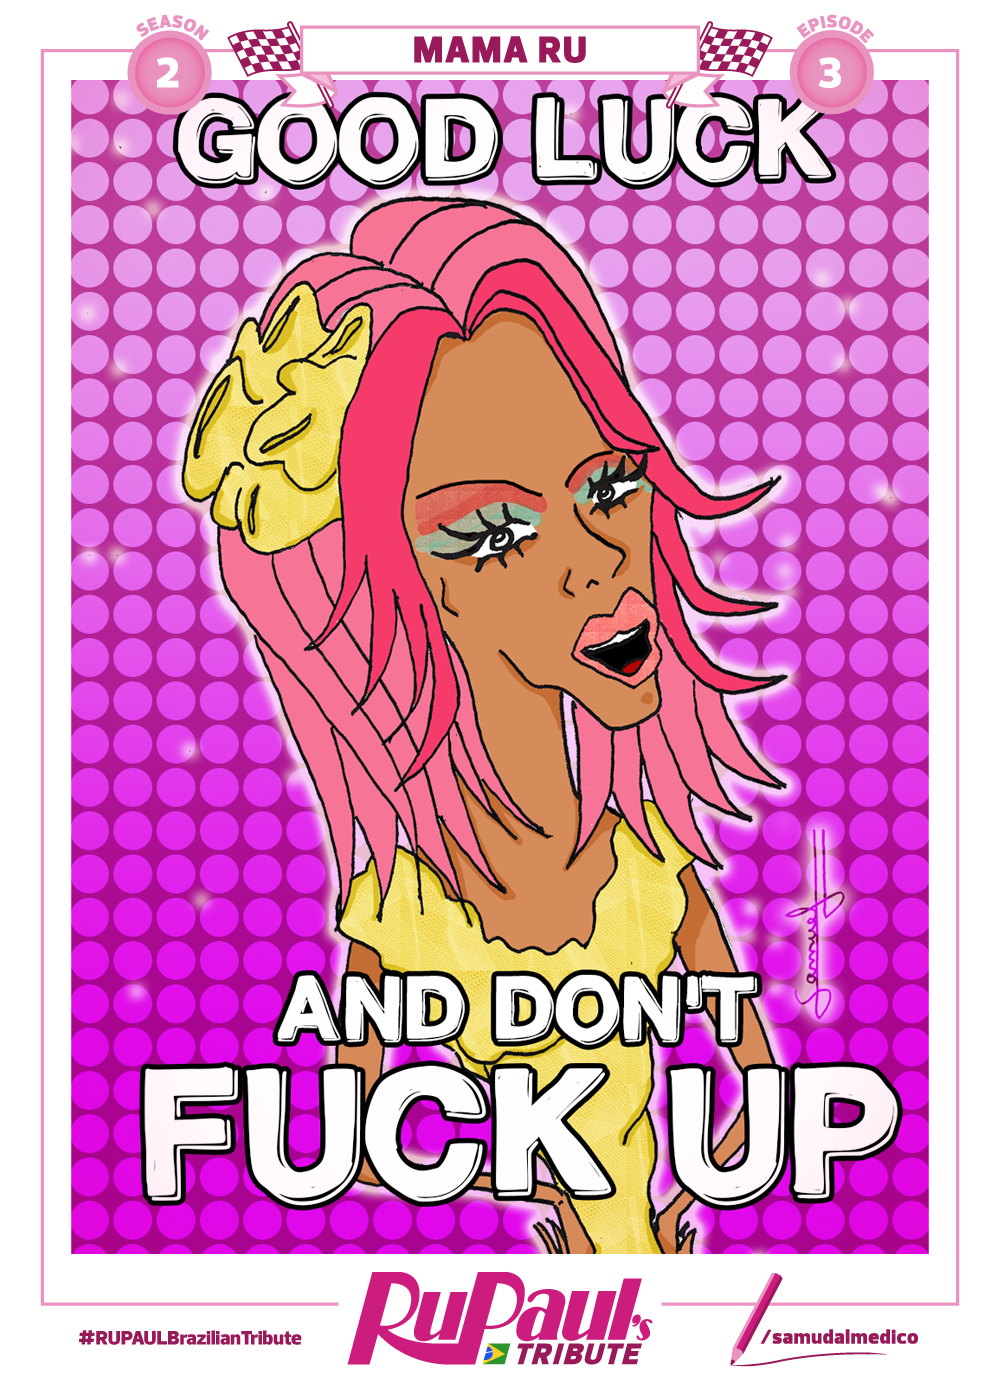 Rupaul Drag drag queens LGBT gay LogoTV RPDR collab fanart shemale diva paper toy logo tv drag race